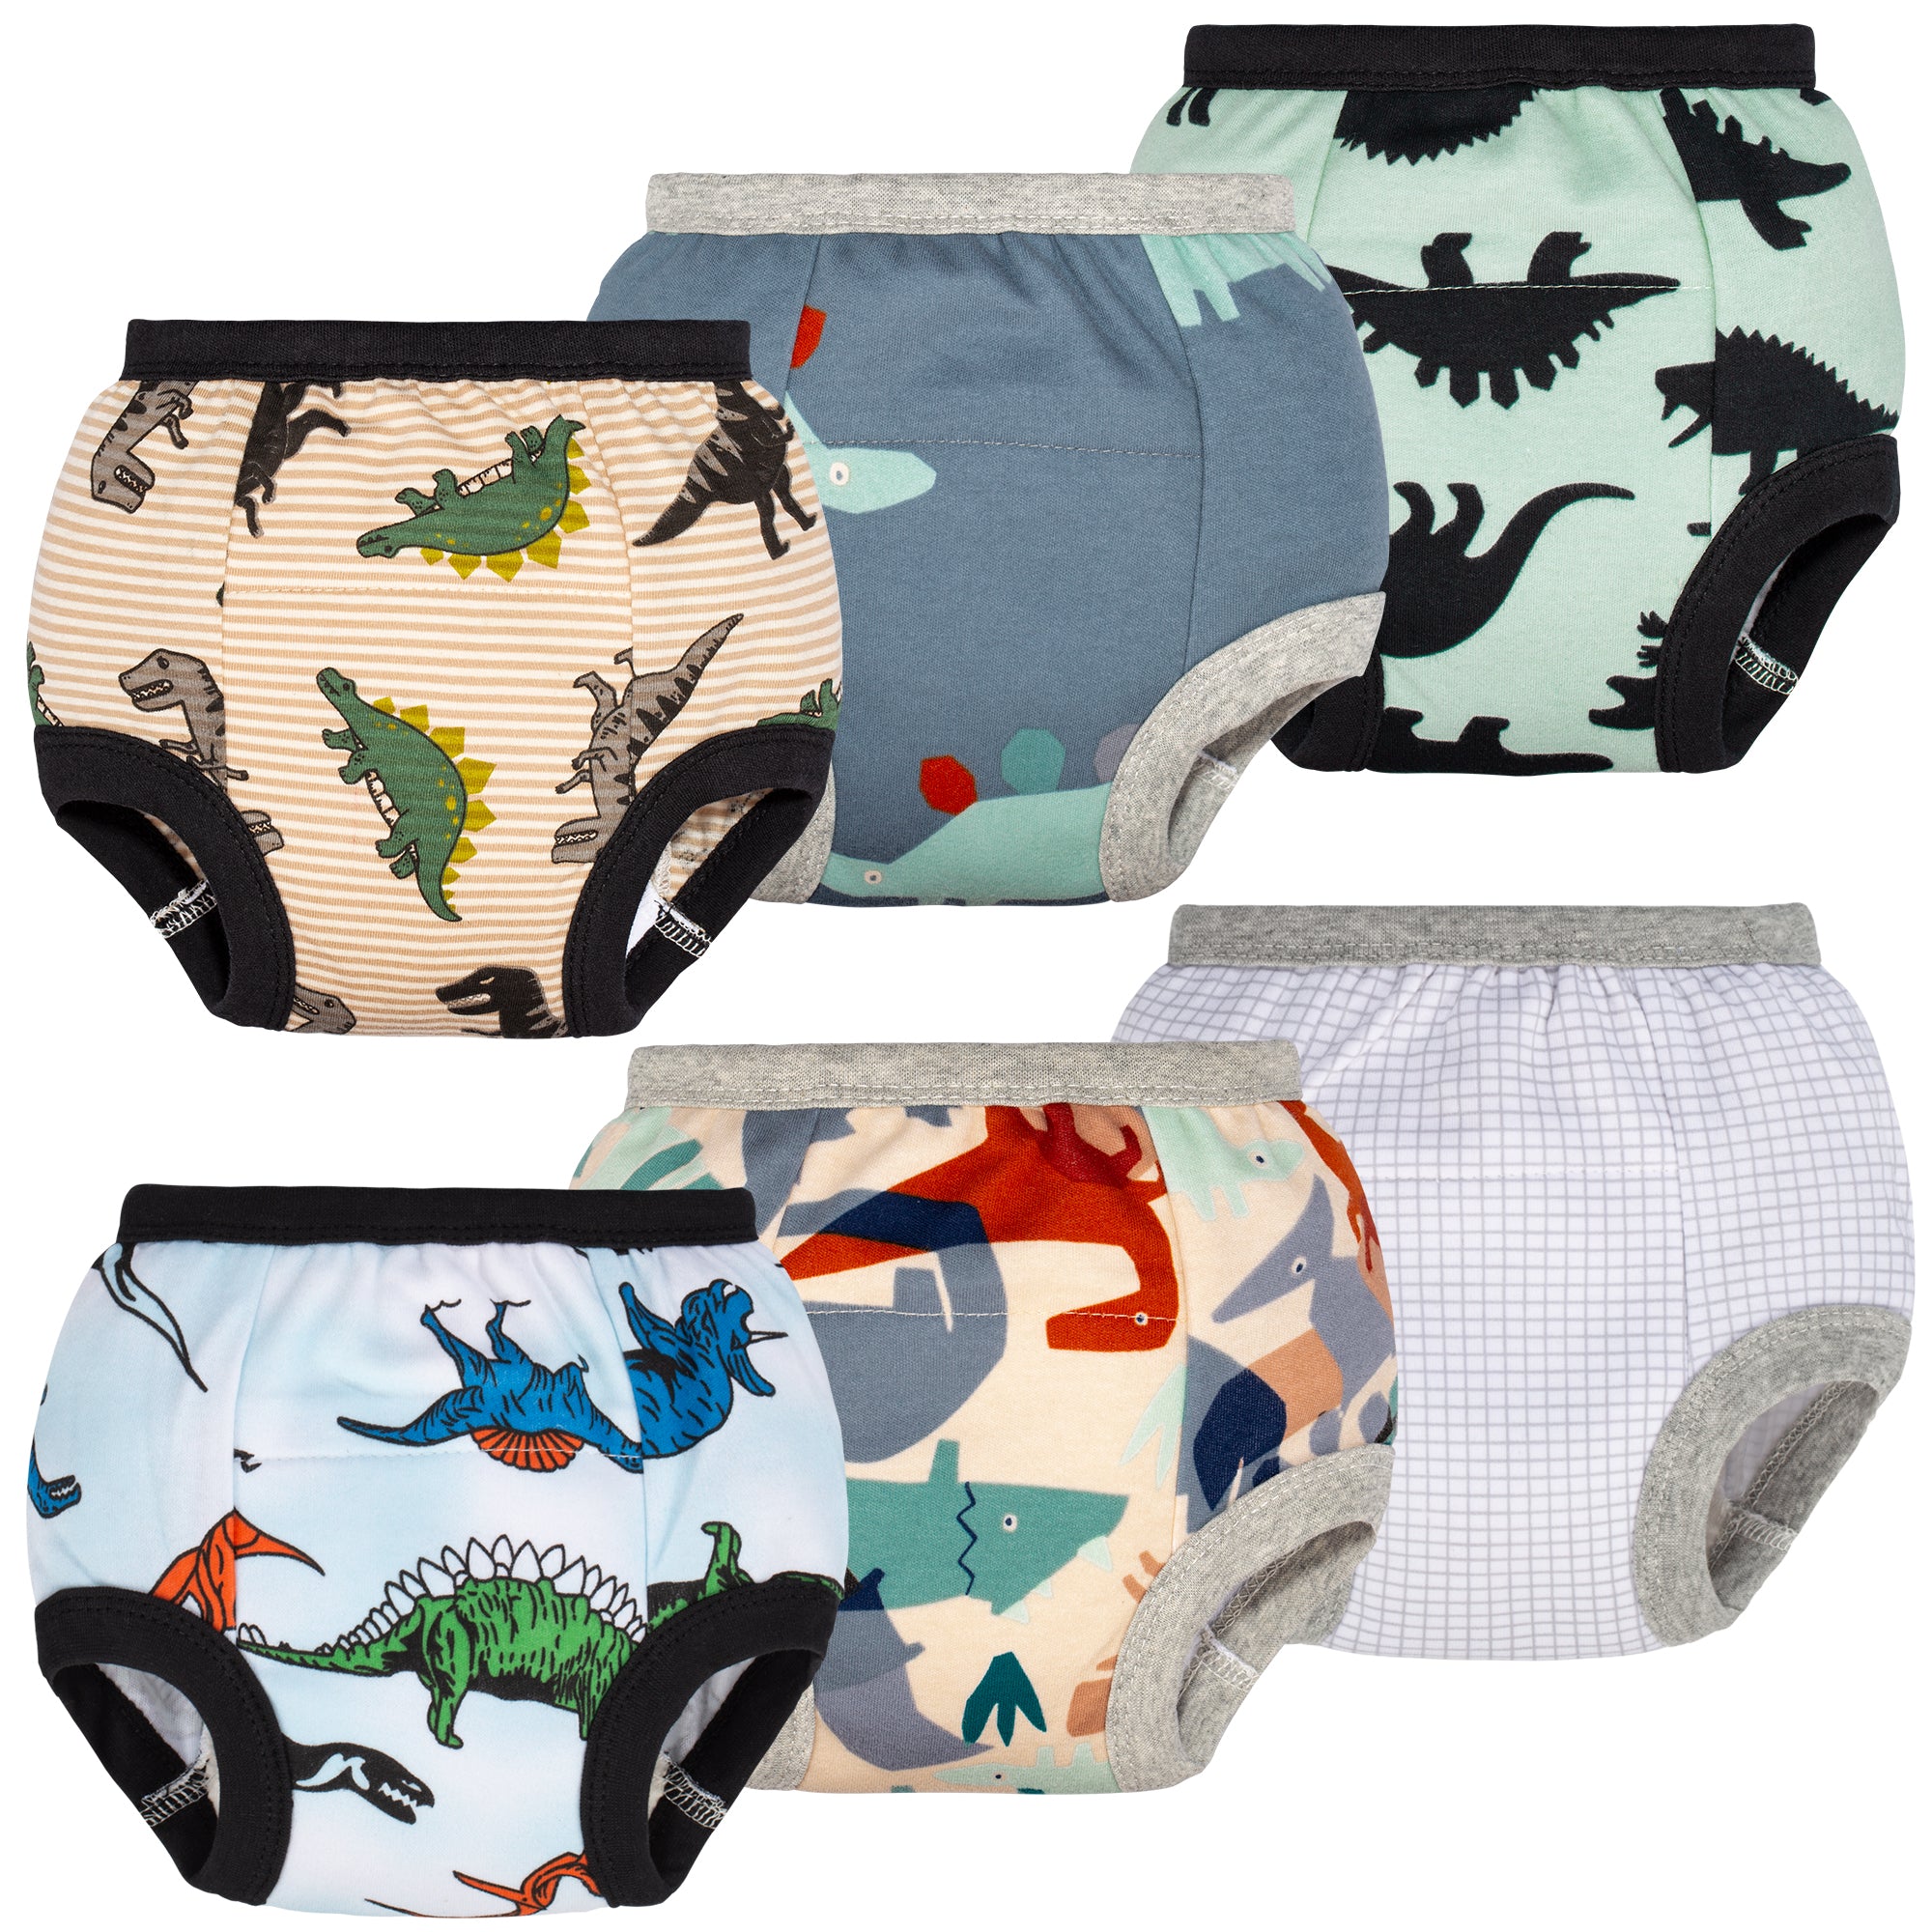 BIG ELEPHANT Toddler Potty Training Pants, Cotton Soft Training Underwear  for Girls, 12-24 Months